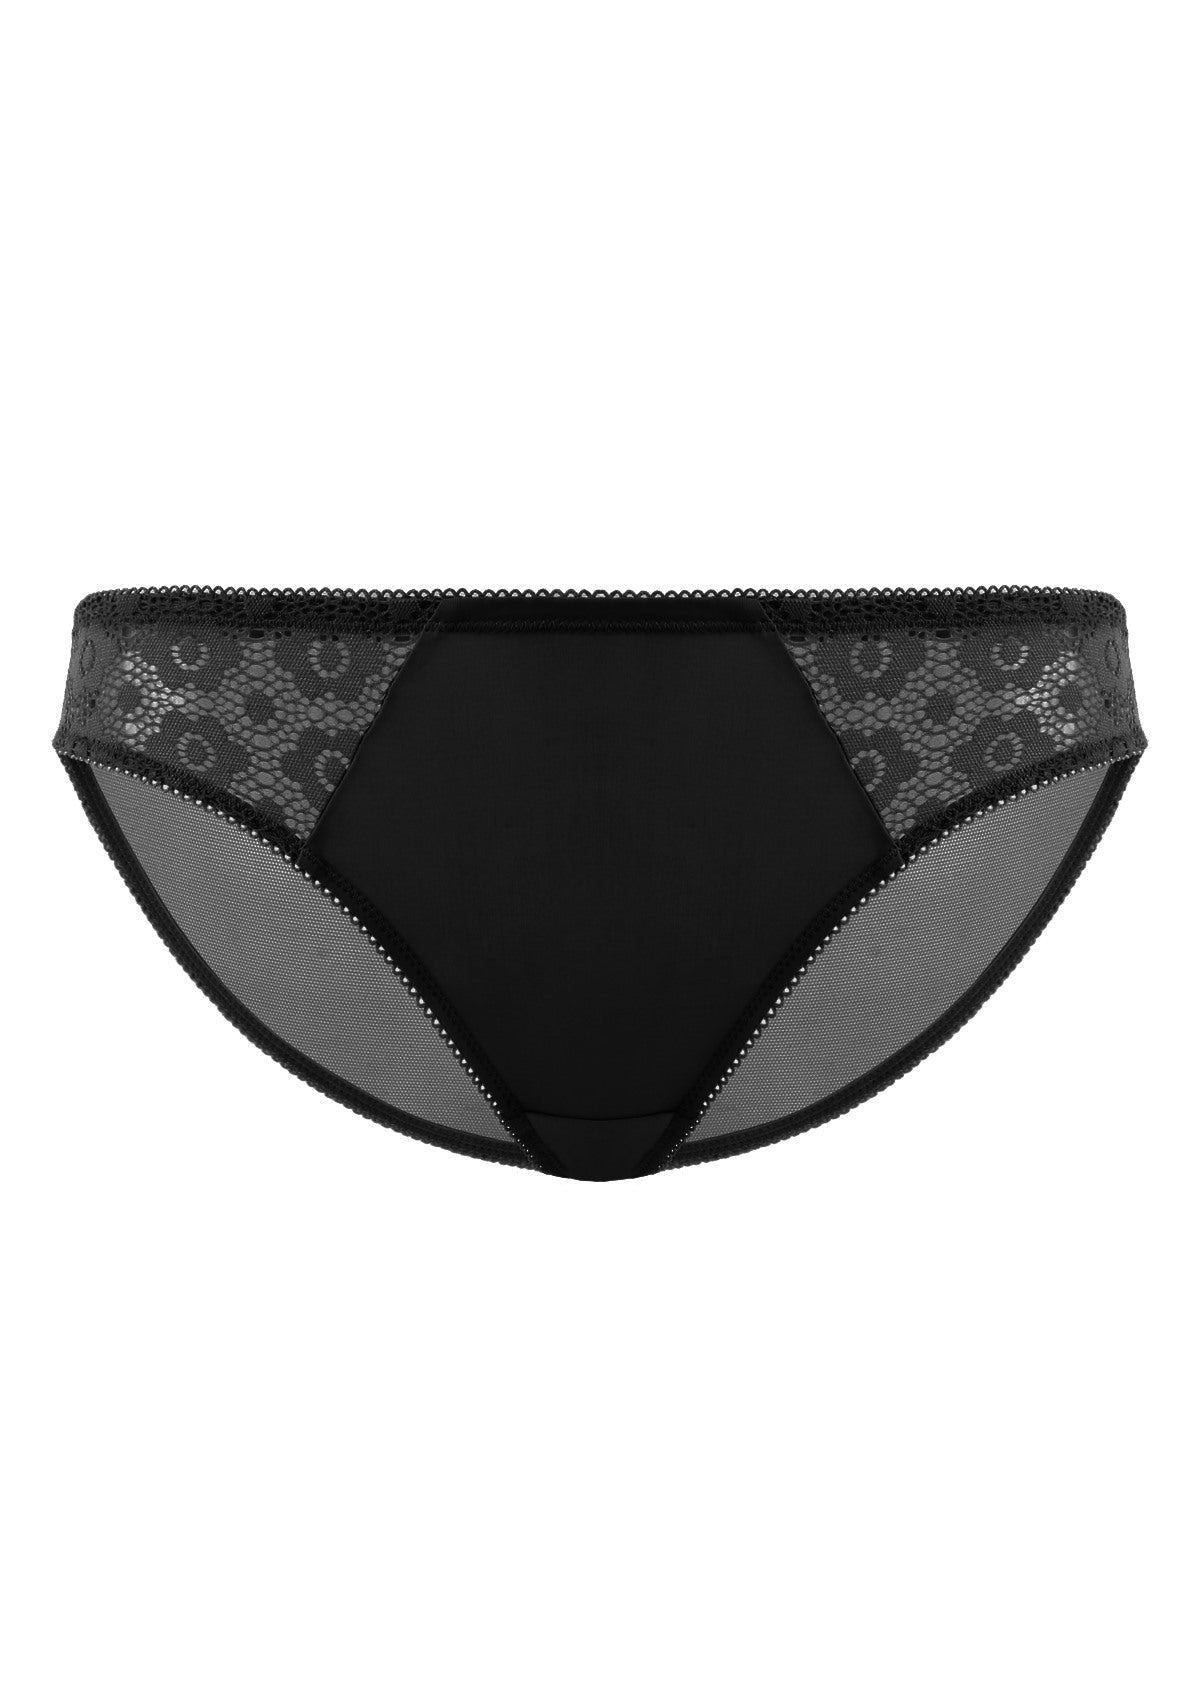 HSIA Serena Comfy Lace Trim Stylish Bikini Underwear - L / Black